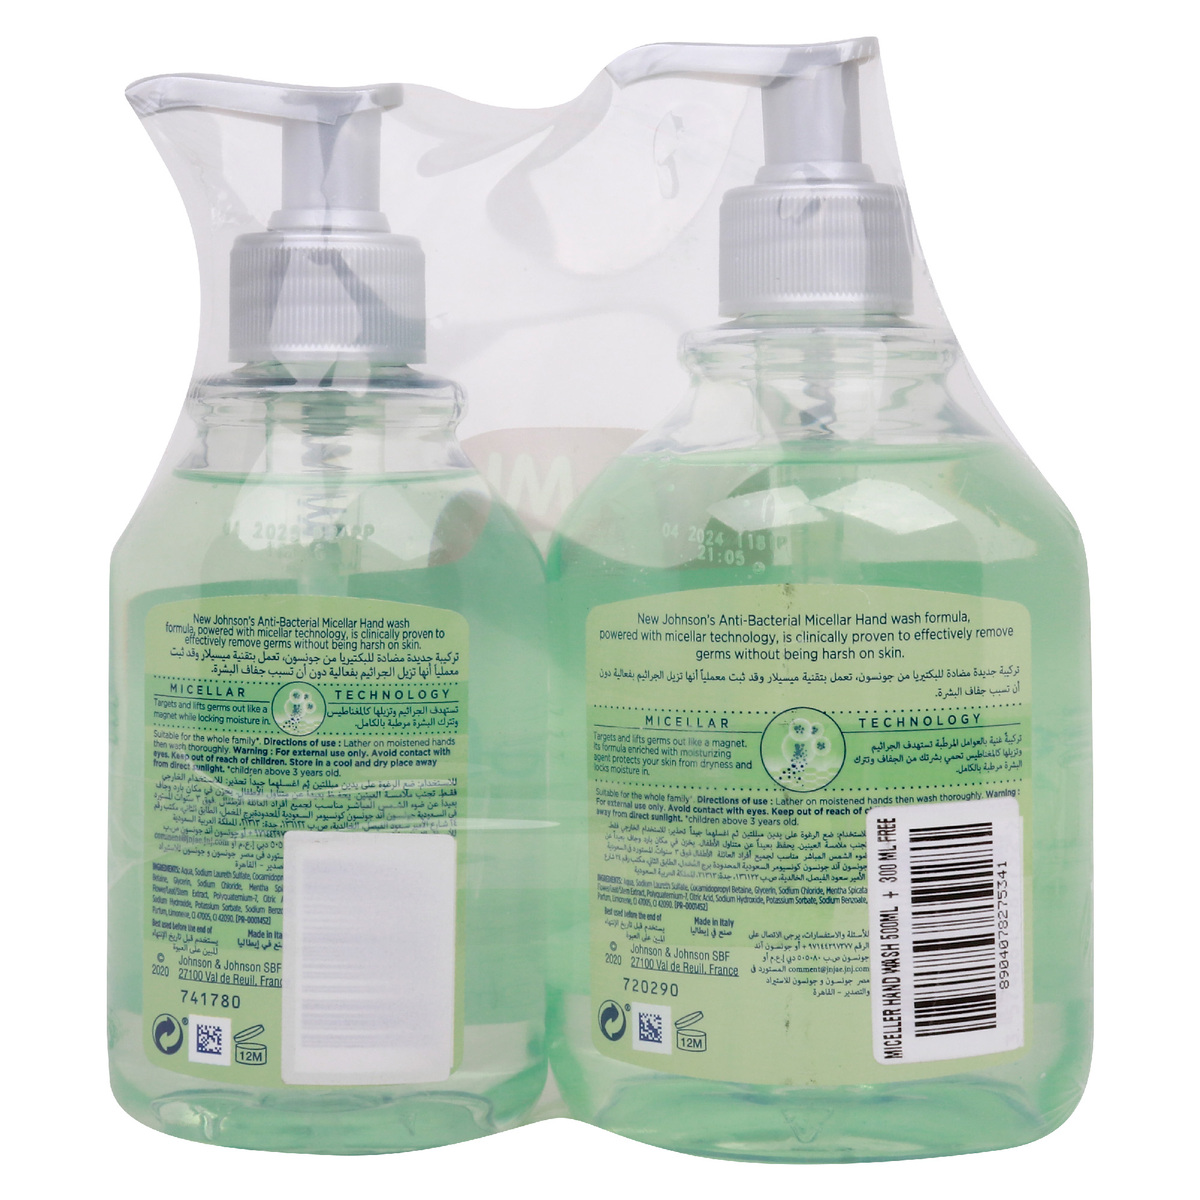 Johnson's Anti-Bacterial Micellar Handwash 500 ml + 300 ml